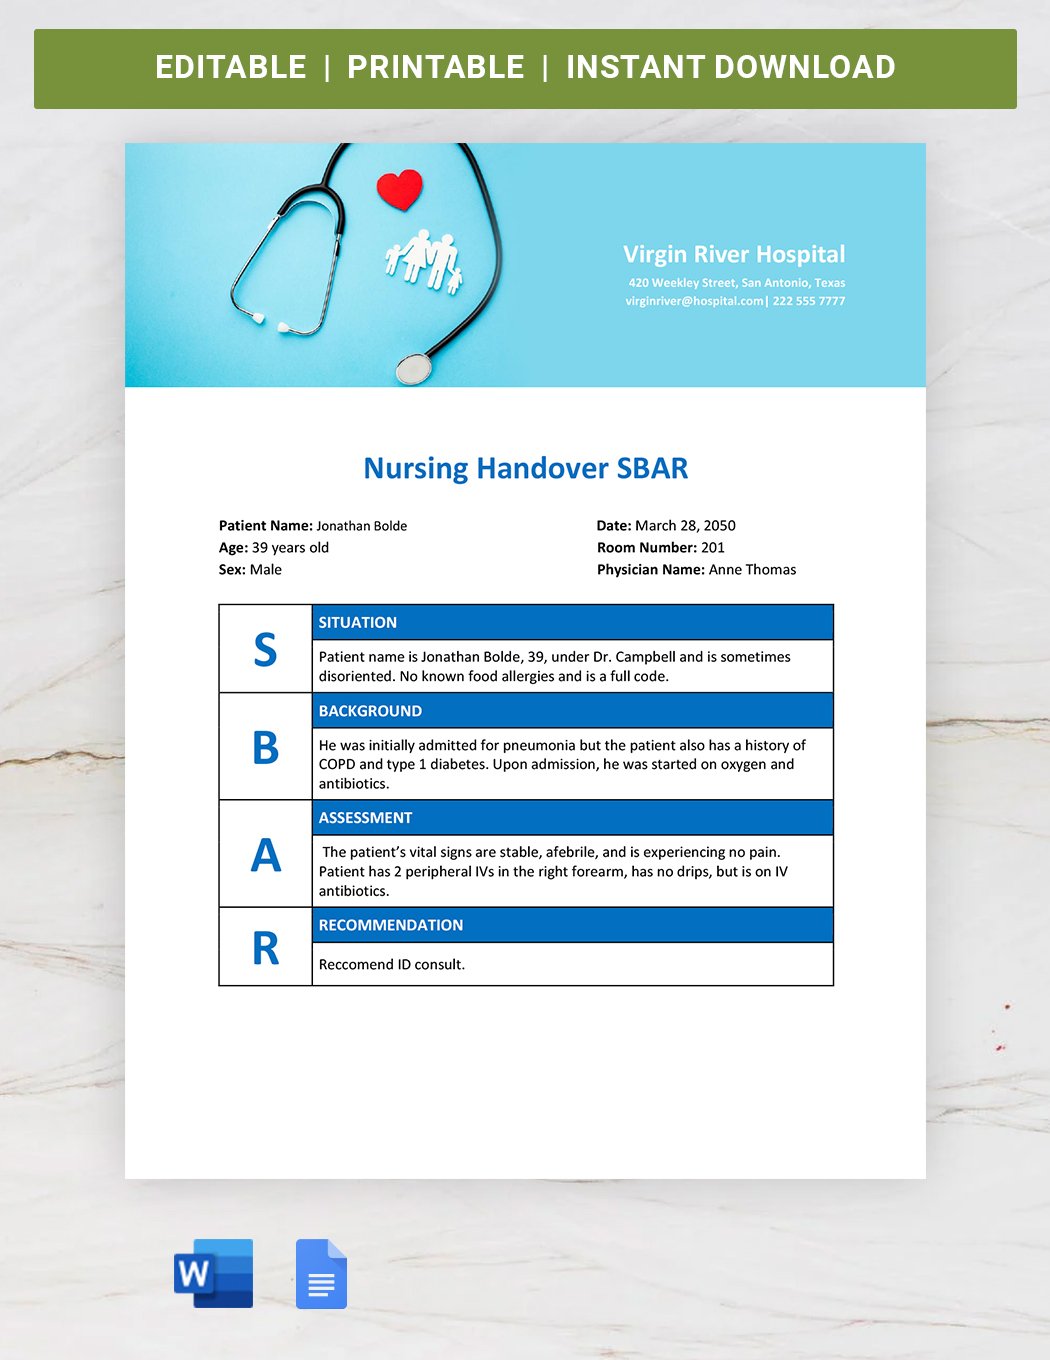 Nursing Handover SBAR Template in Word, Google Docs